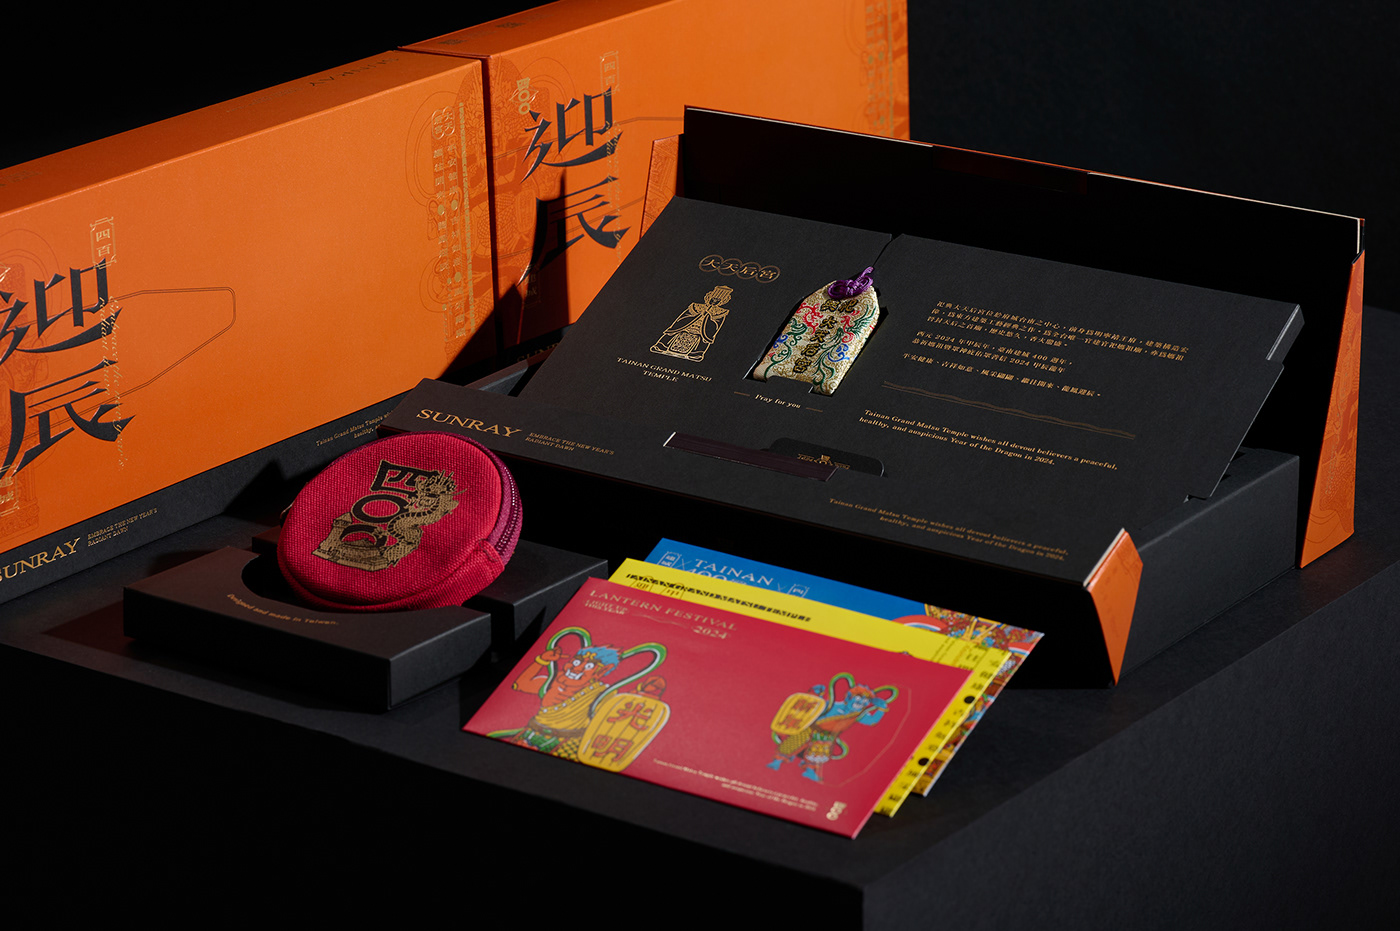 sunray 4W STUDIO Siwei Design artwork packaging design croter new year gift box 테라벳추천인코드 建筑设计